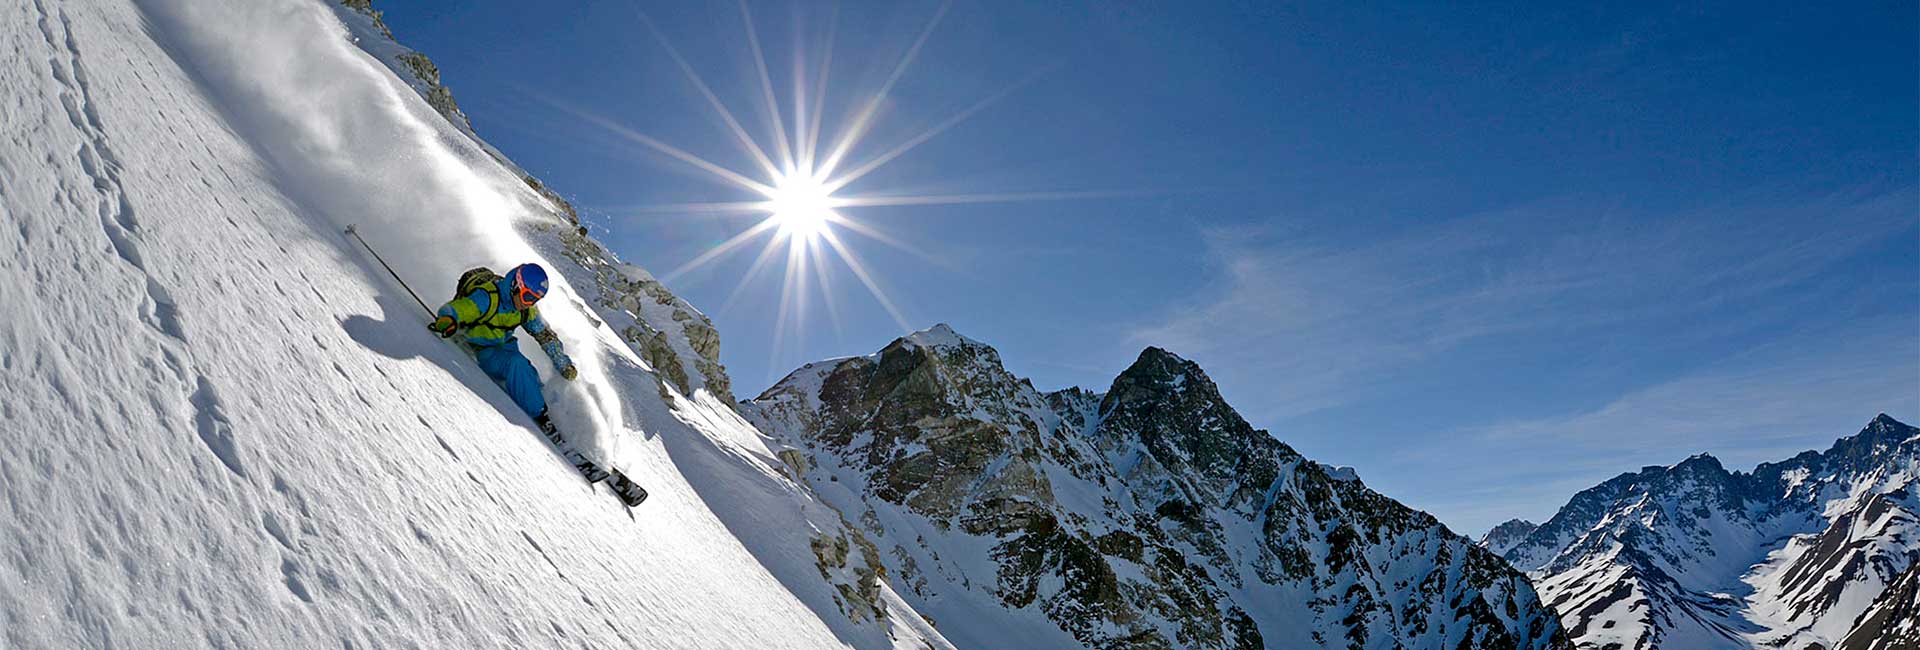 skier turning in sun header